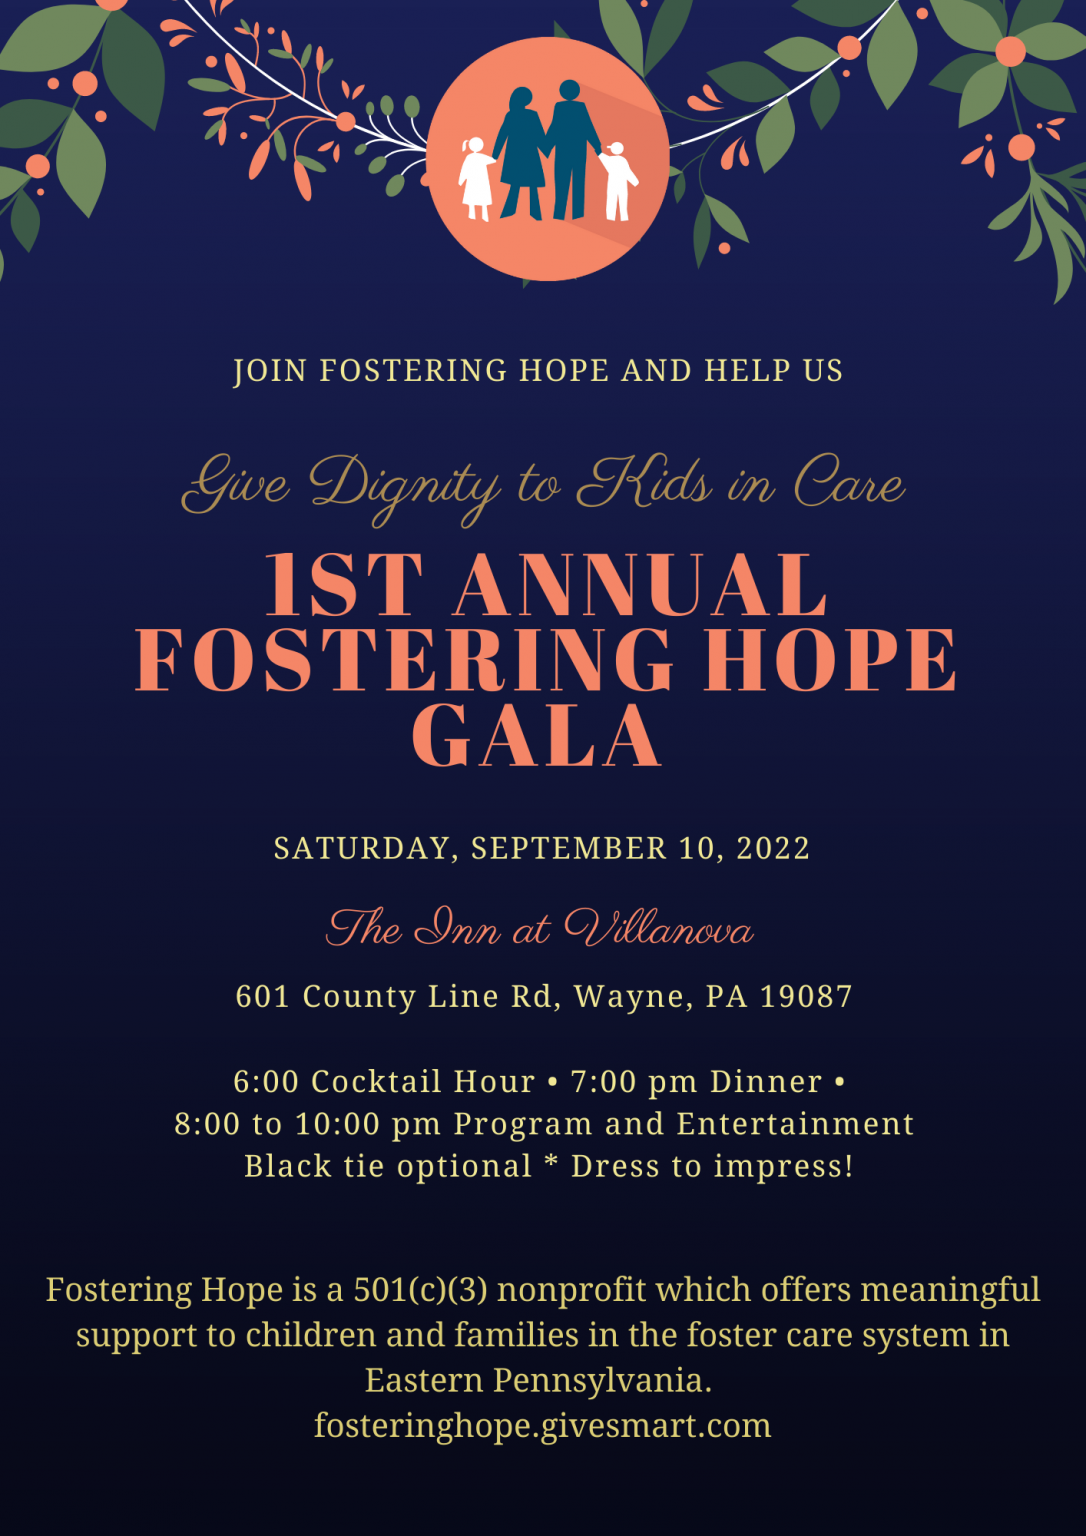 Gala Fostering Hope